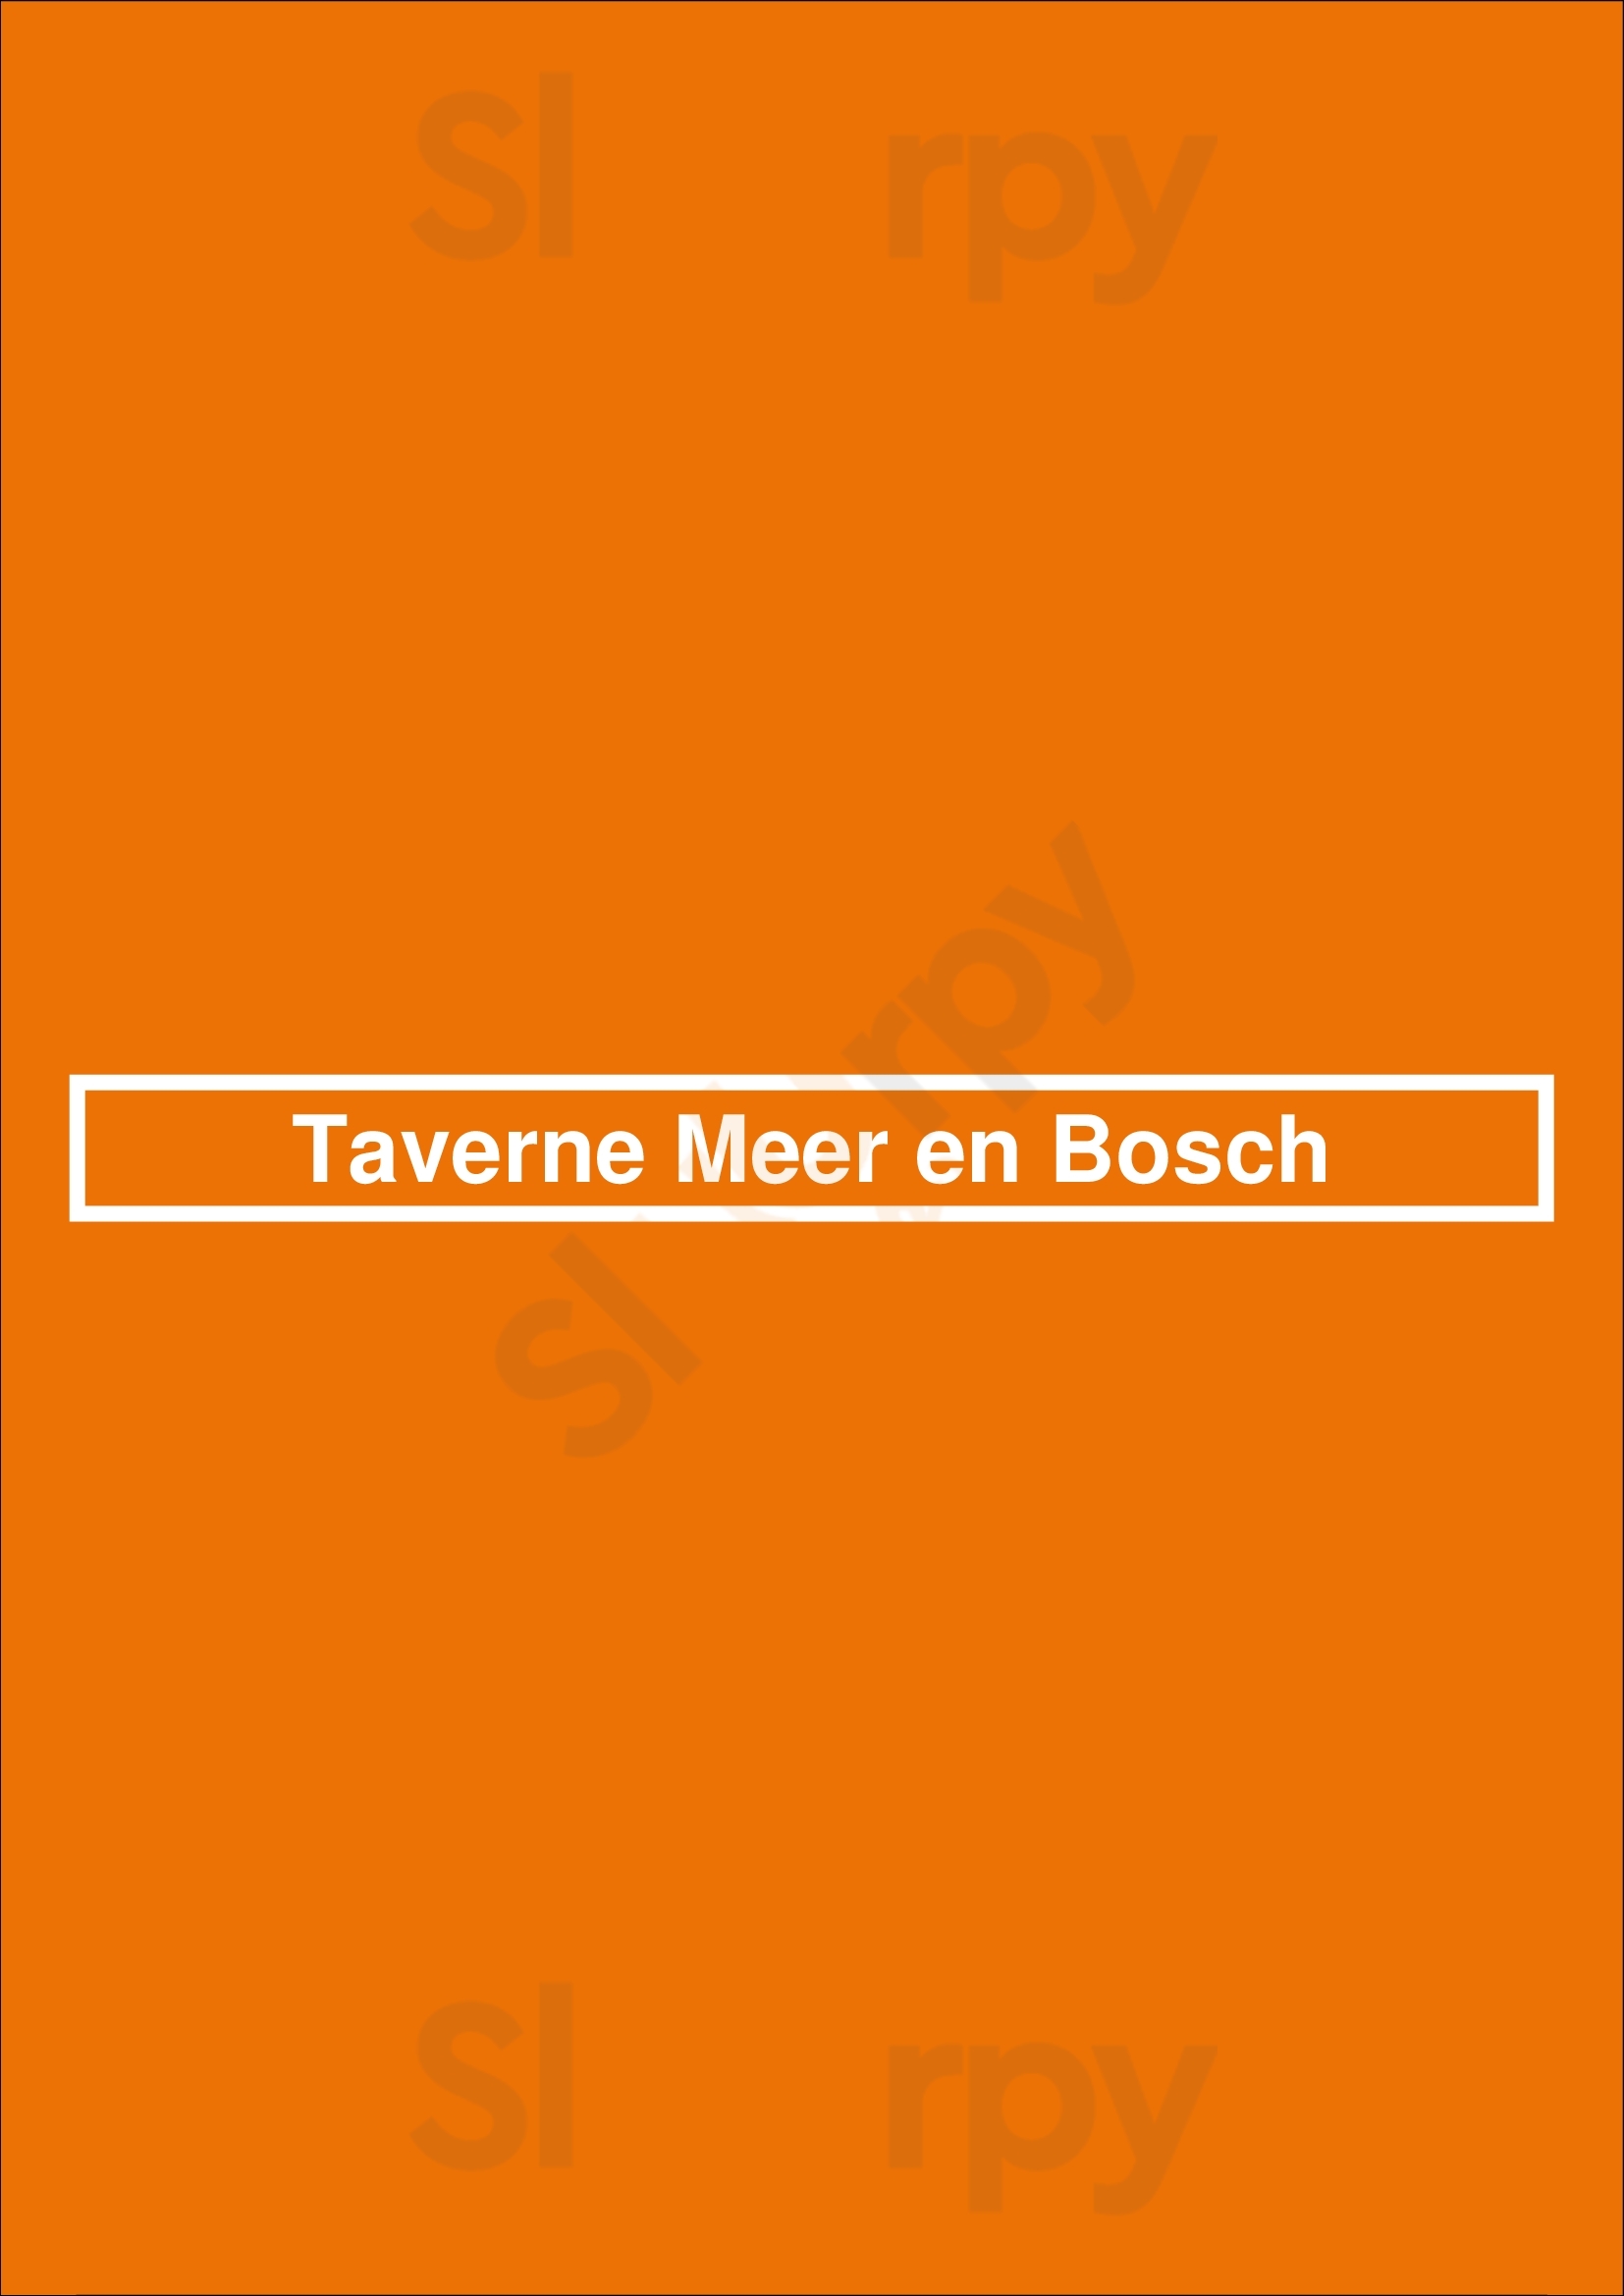 Taverne Meer En Bosch Den Haag Menu - 1